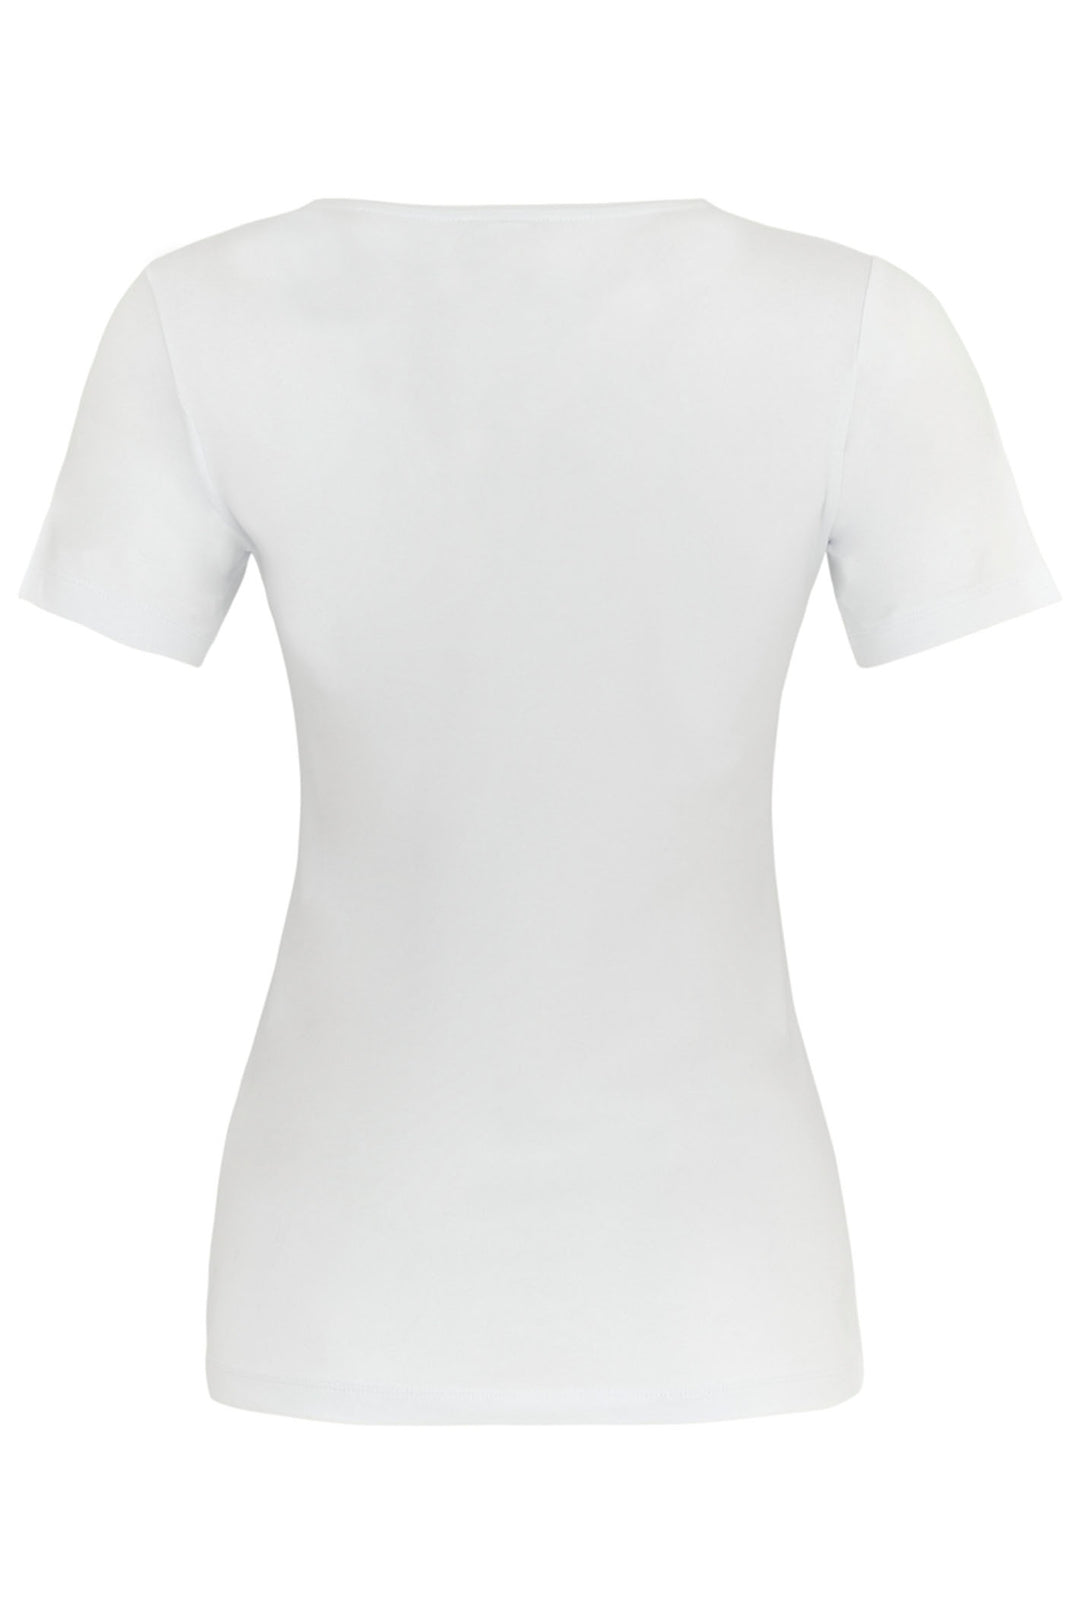 Dolcezza 24501 White V-Neck Short Sleeve Top - Shirley Allum Boutique